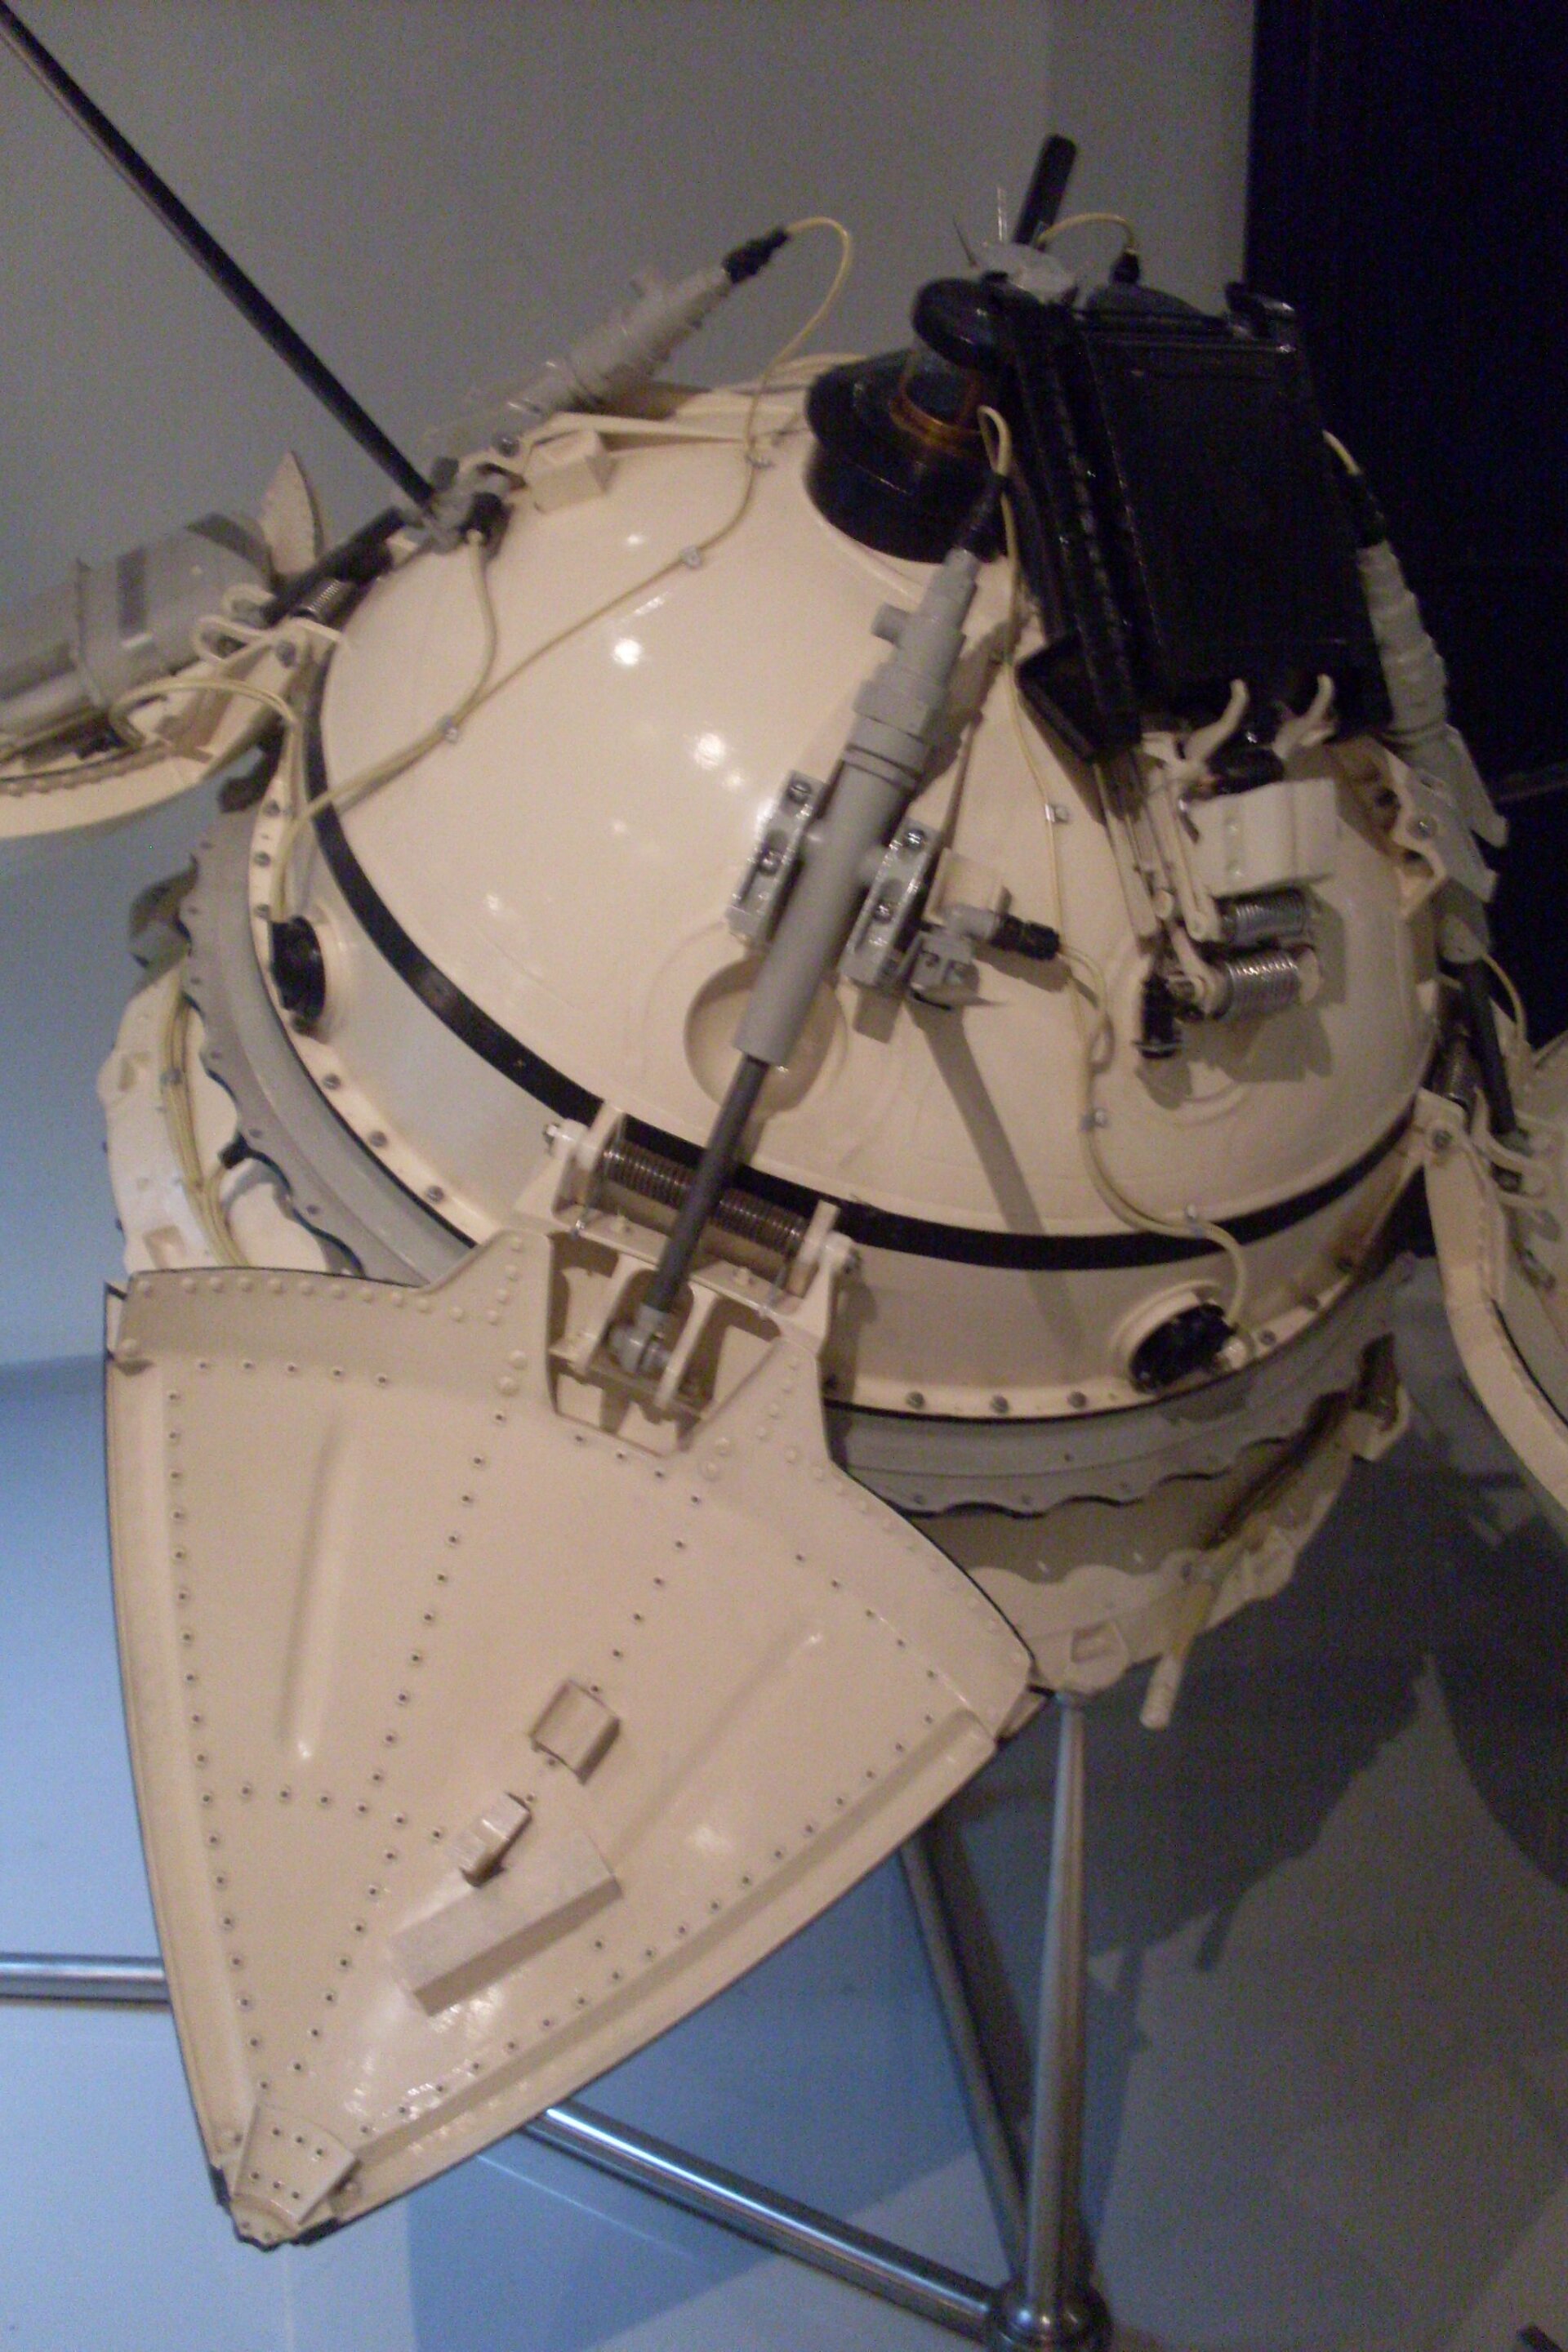 Mockup (1:1) of Mars 3 lander at Memorial Museum of Cosmonautics, Moscow